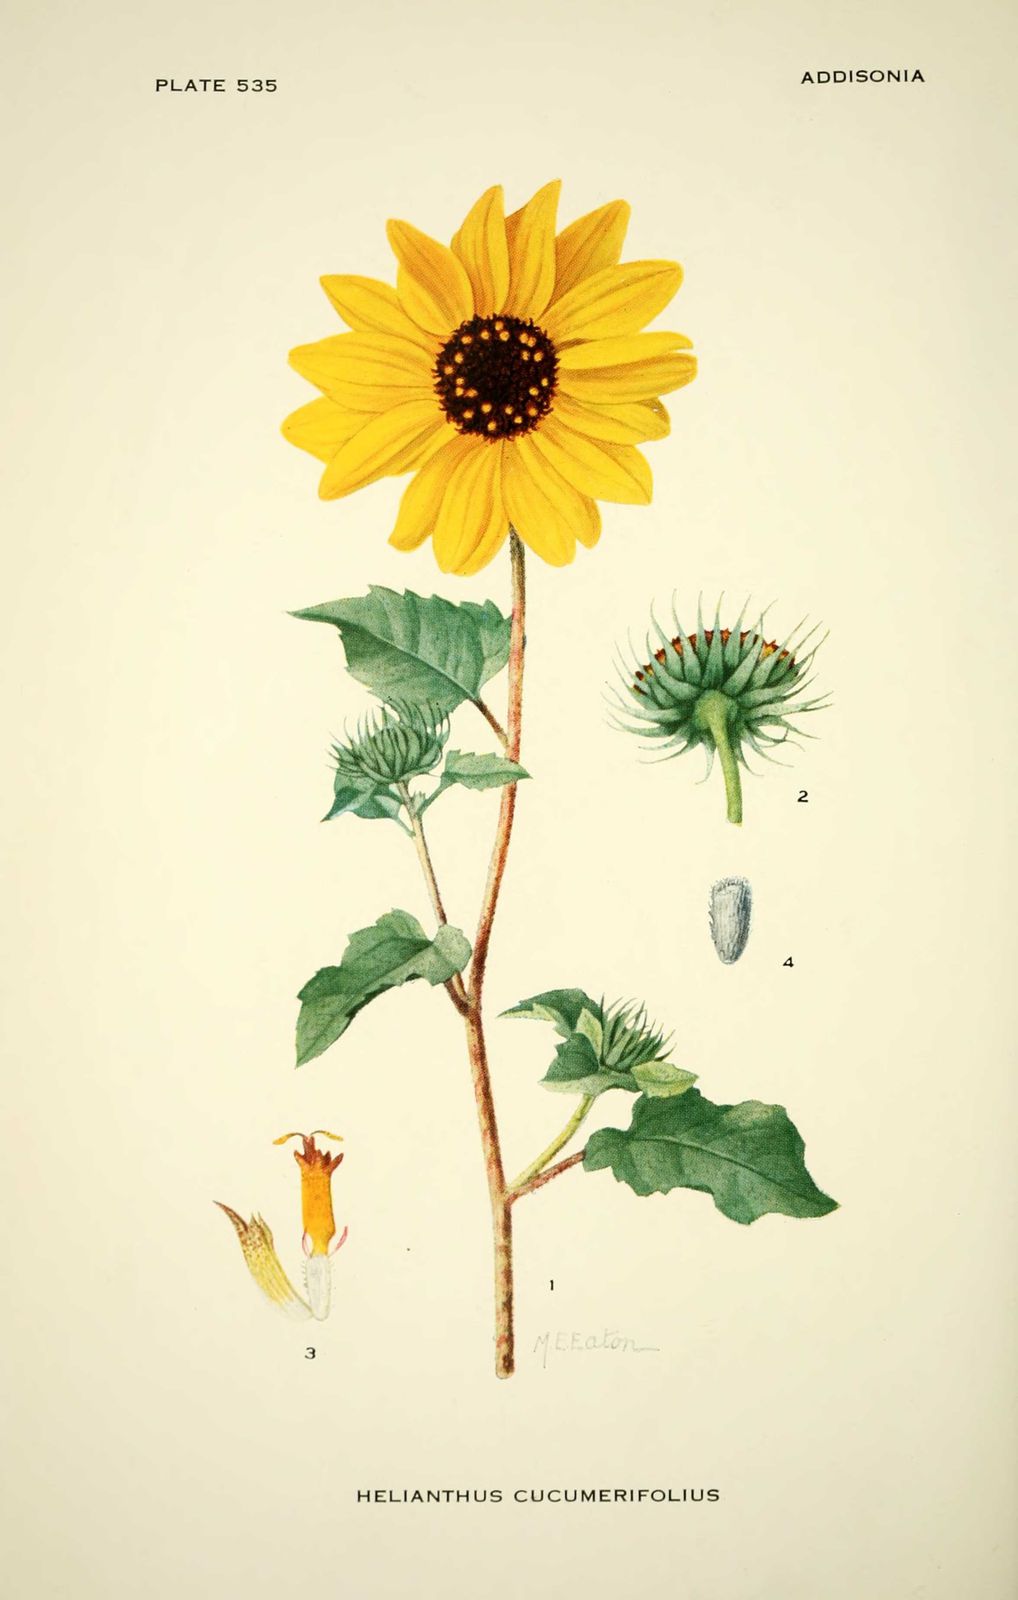 Dessin-illustration flore fleur helianthus cucumerifolius (debilis) - soleil, helianthe